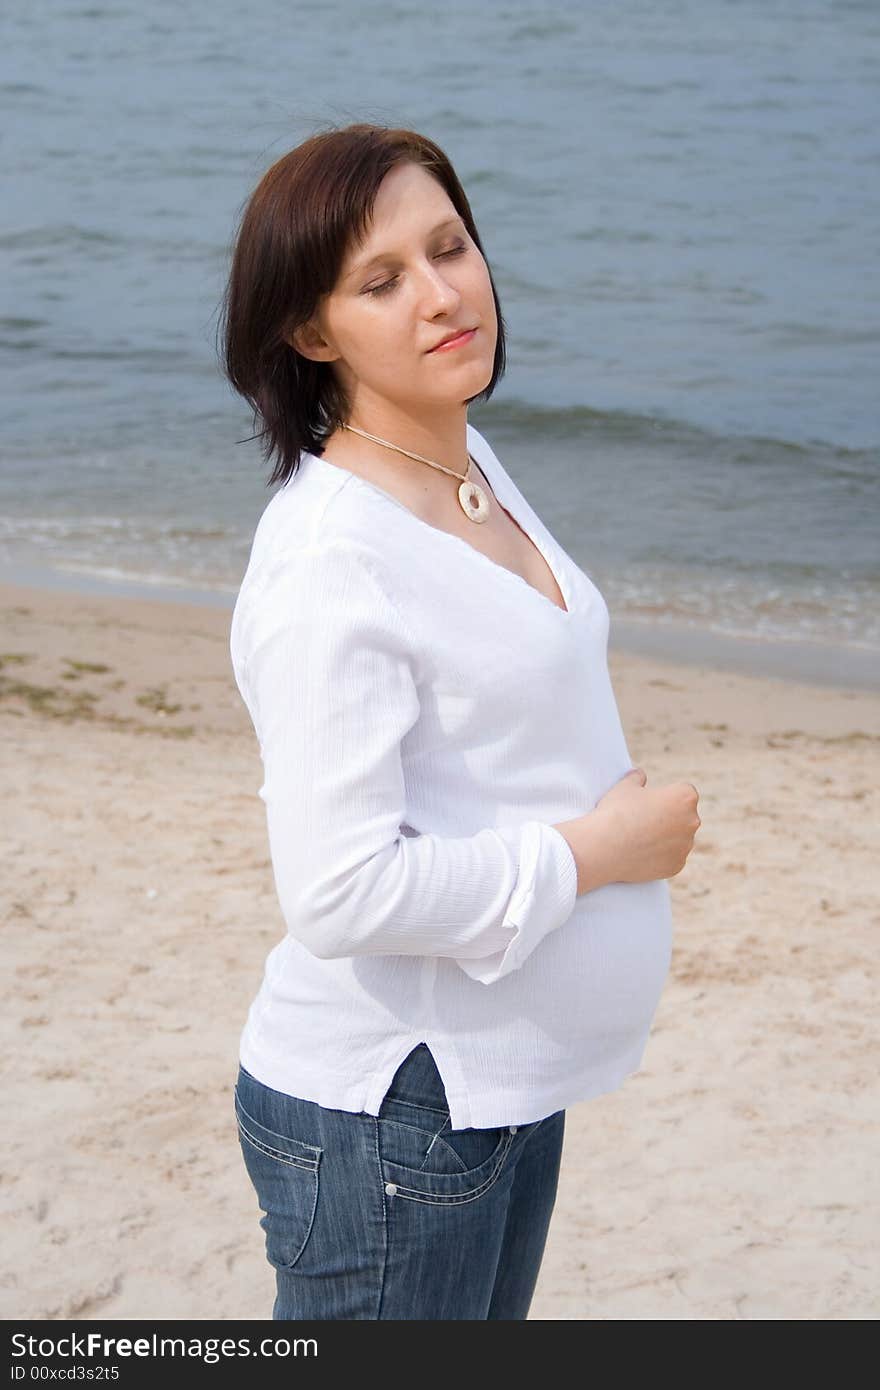 Pregnant woman on the beach